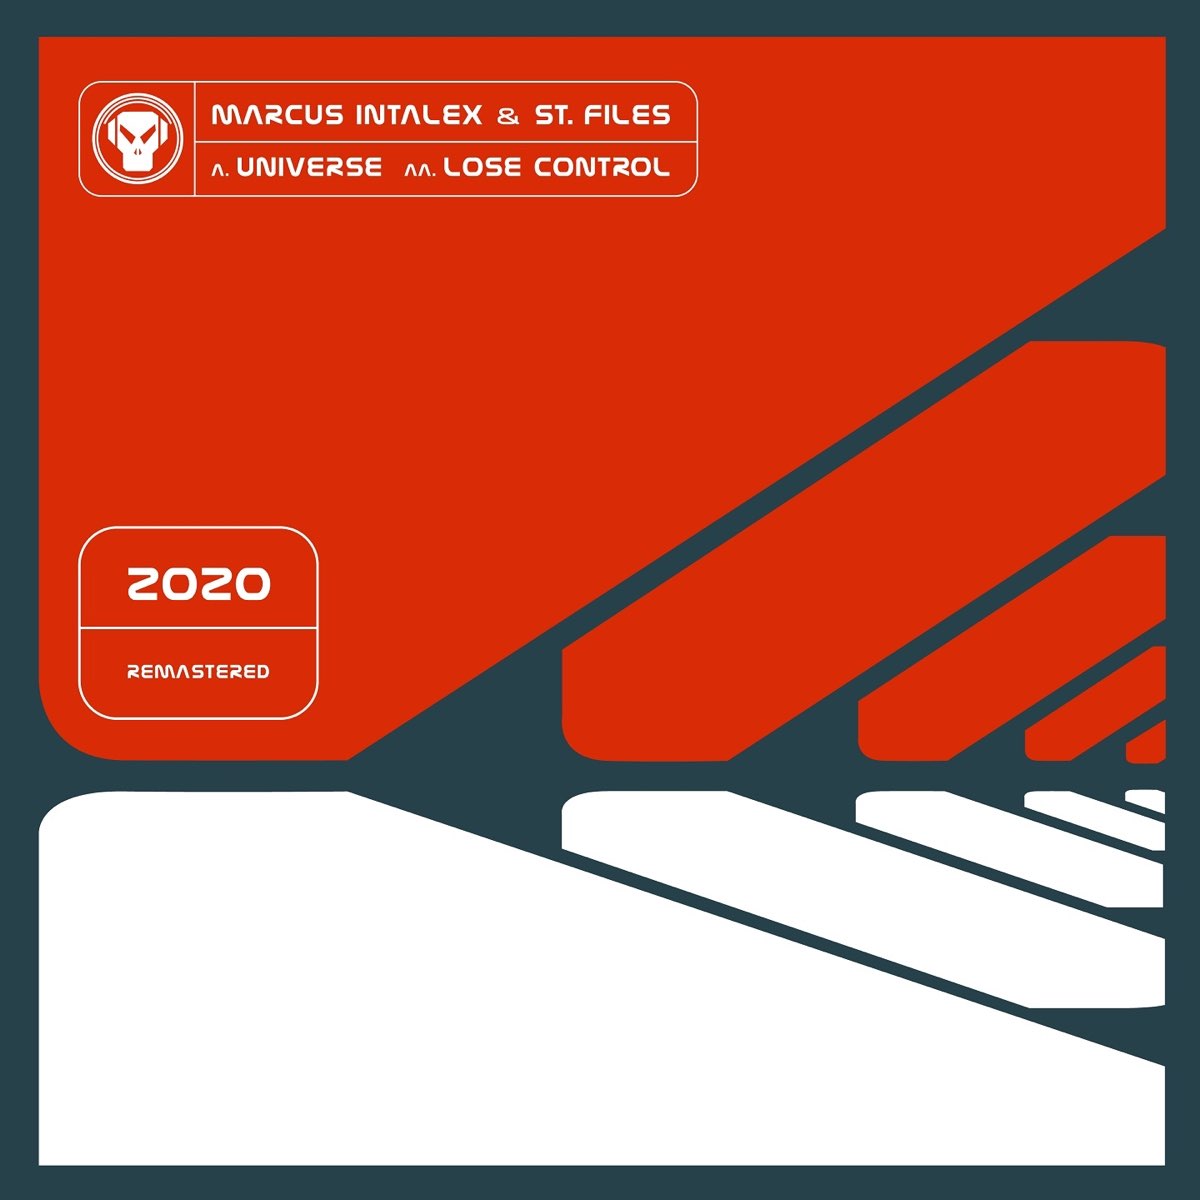 Control 2020. Marcus Intalex & St files - Universe. Selkäsaari 2020 Remastered. Marcus Controllers.